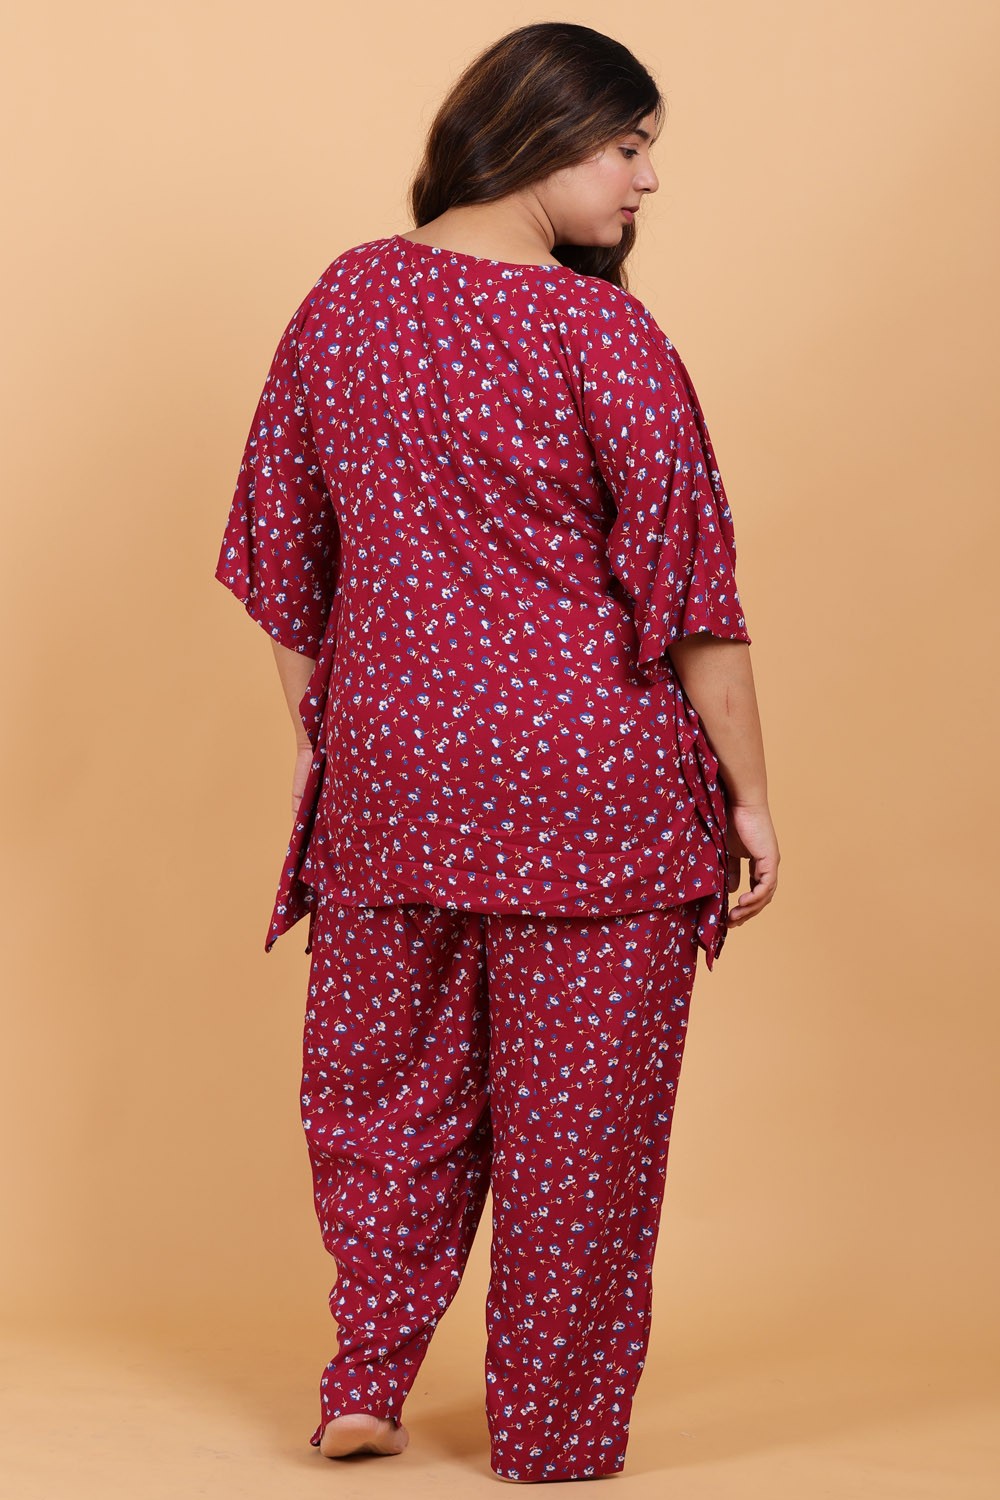 Buy Ladies Night Wear on Wholesale Product Online| Solanki Textiles